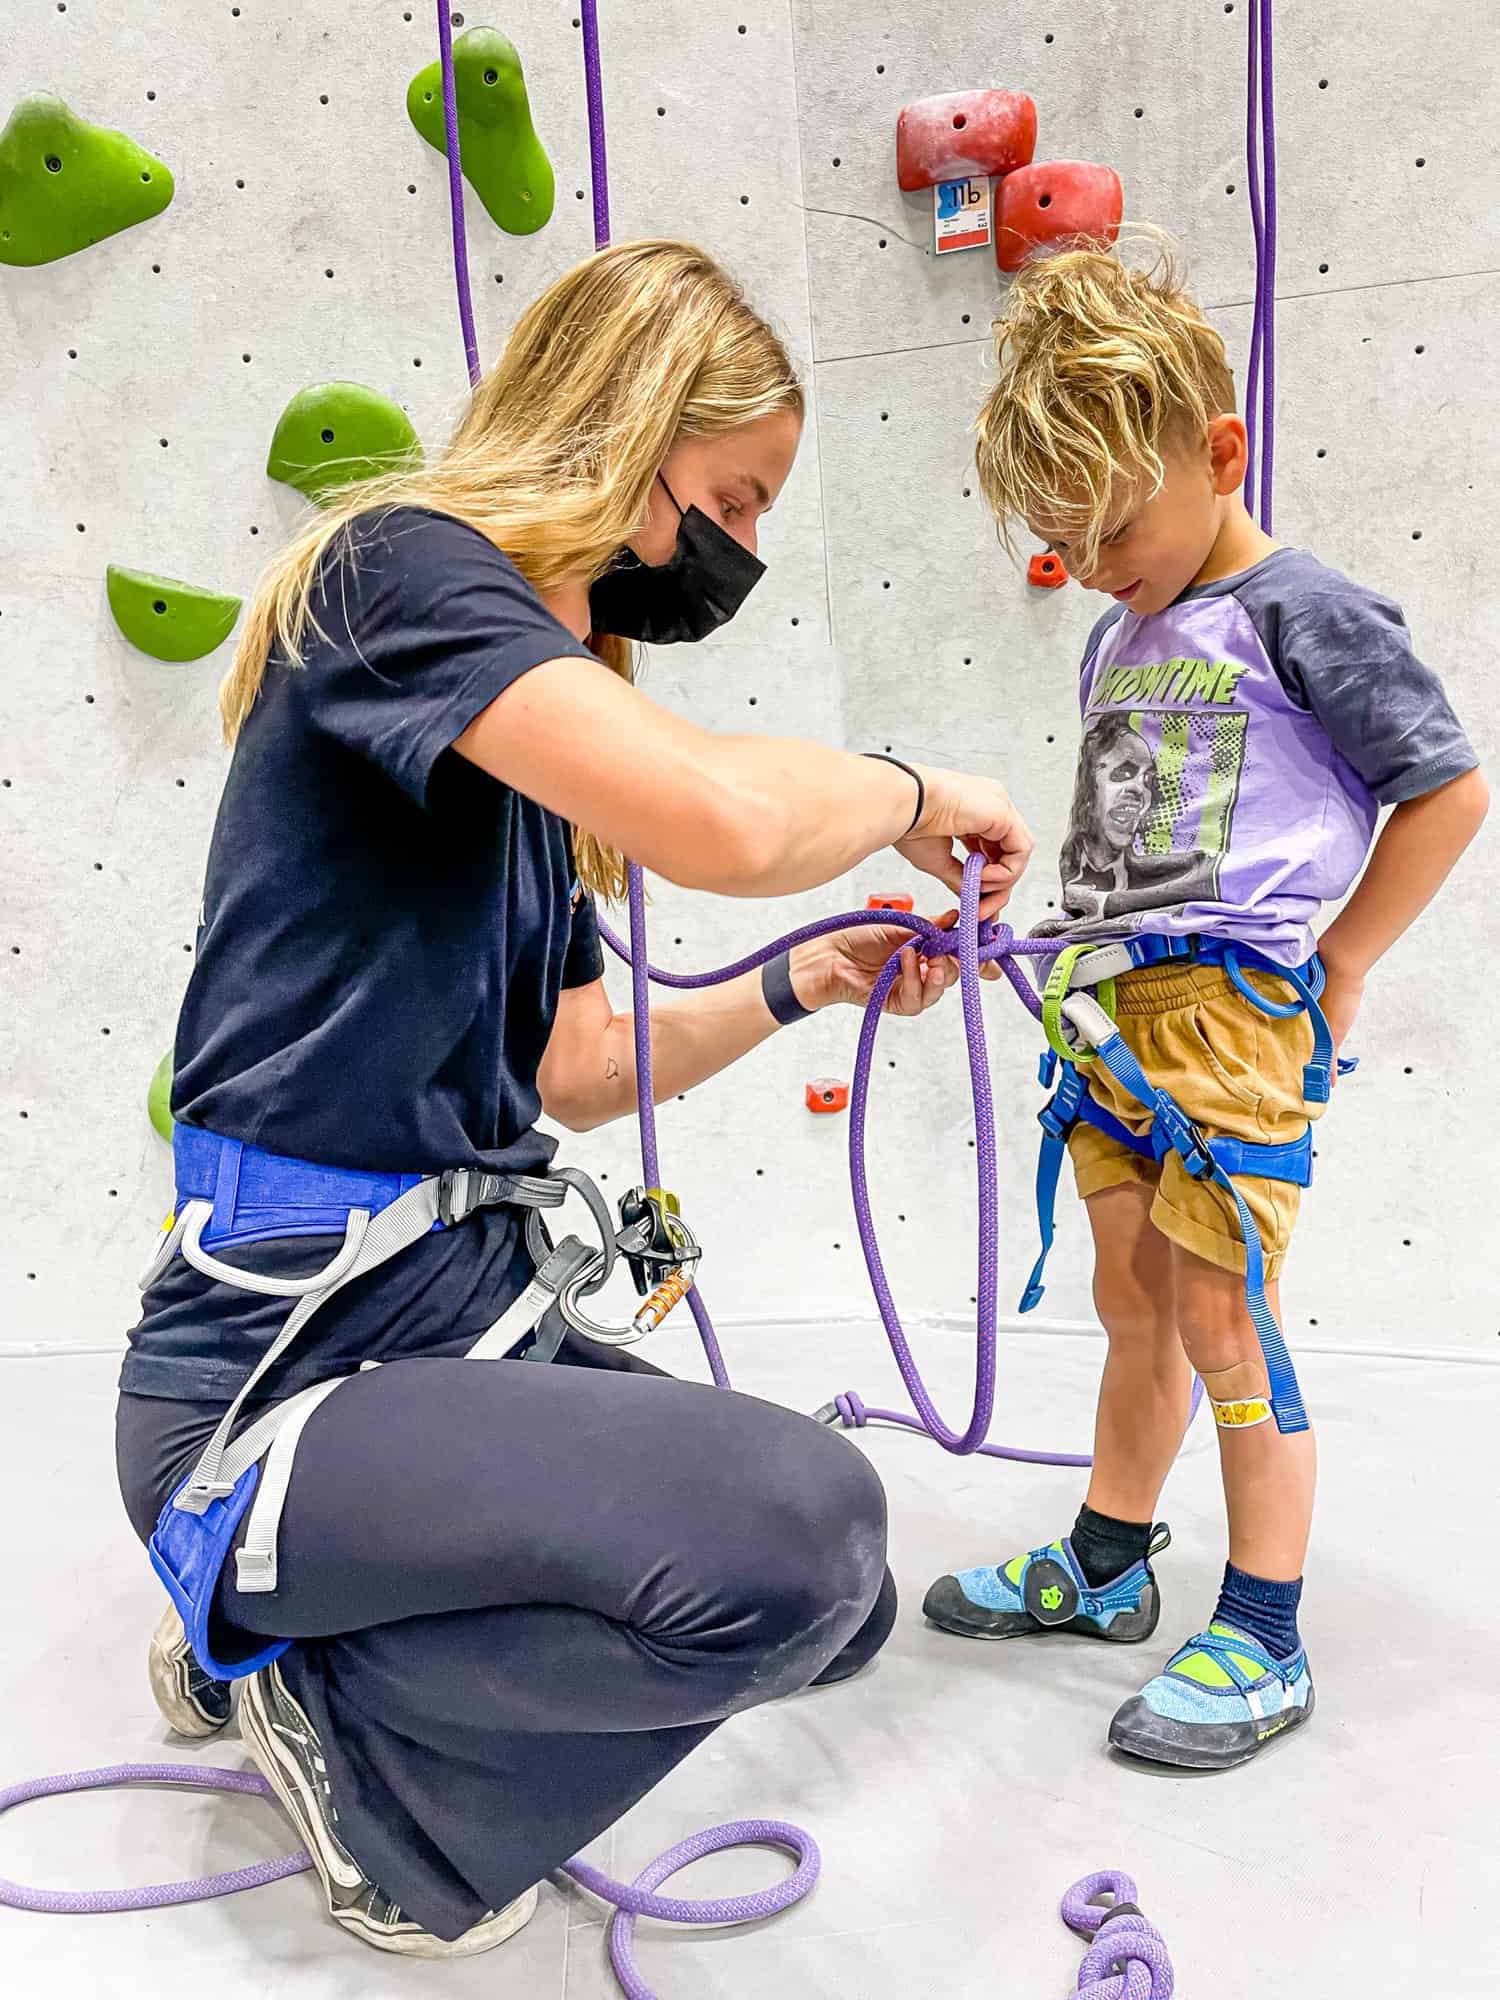 https://runwildmychild.com/wp-content/uploads/2022/09/Indoor-Rock-Climbing-for-Kids-Knot-Tying-scaled.jpg